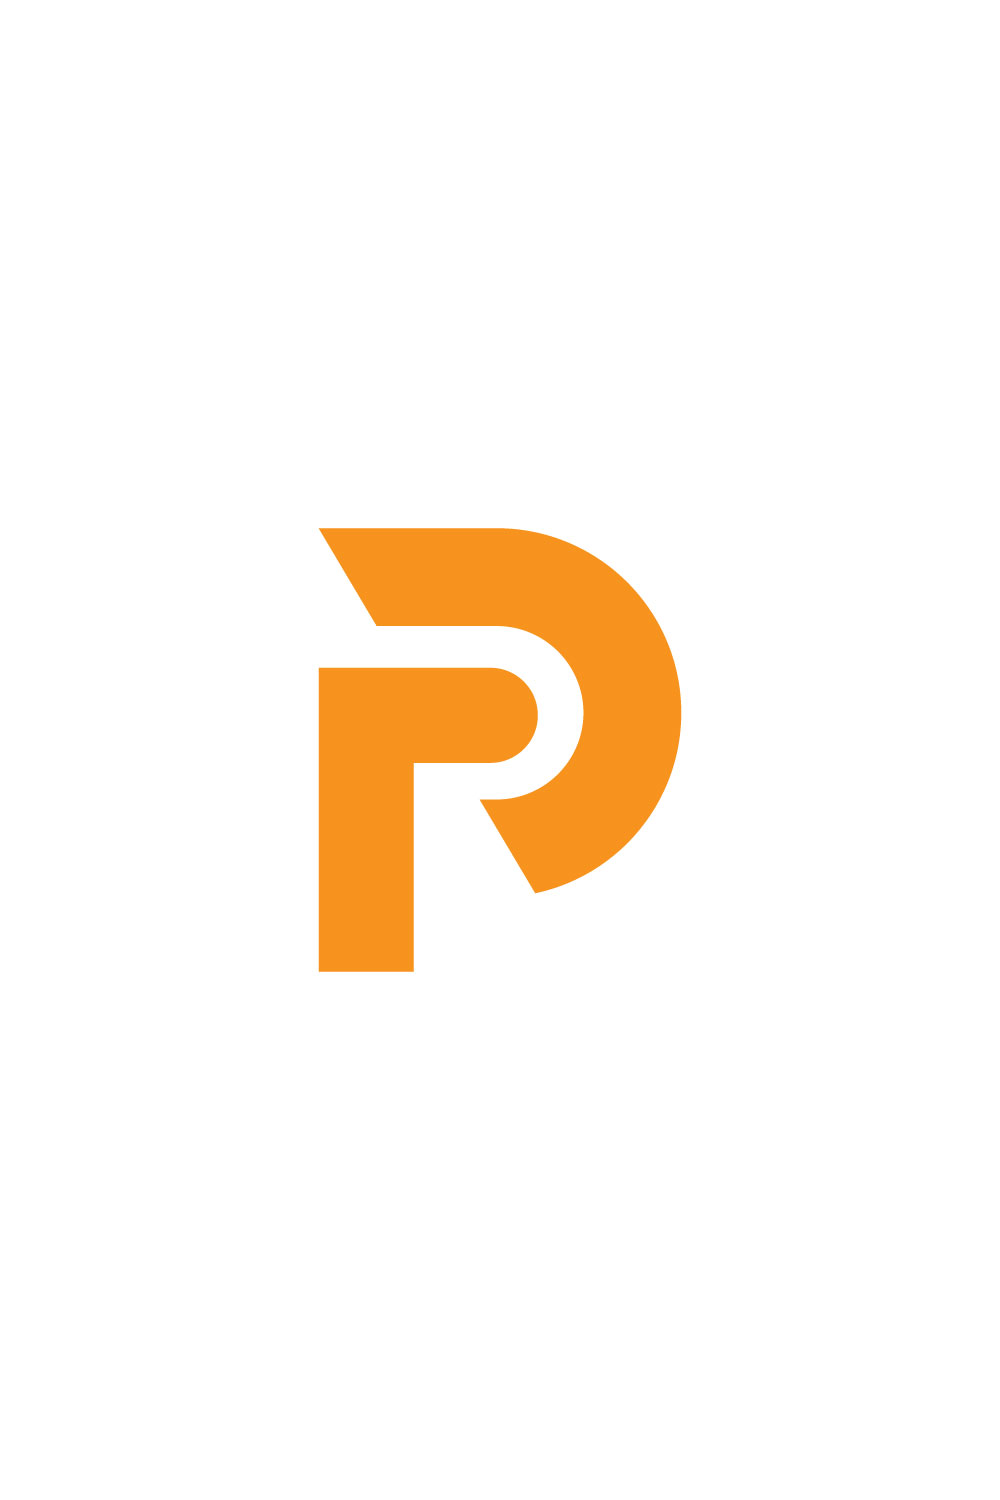 Logo P Design Template Pinterest image.